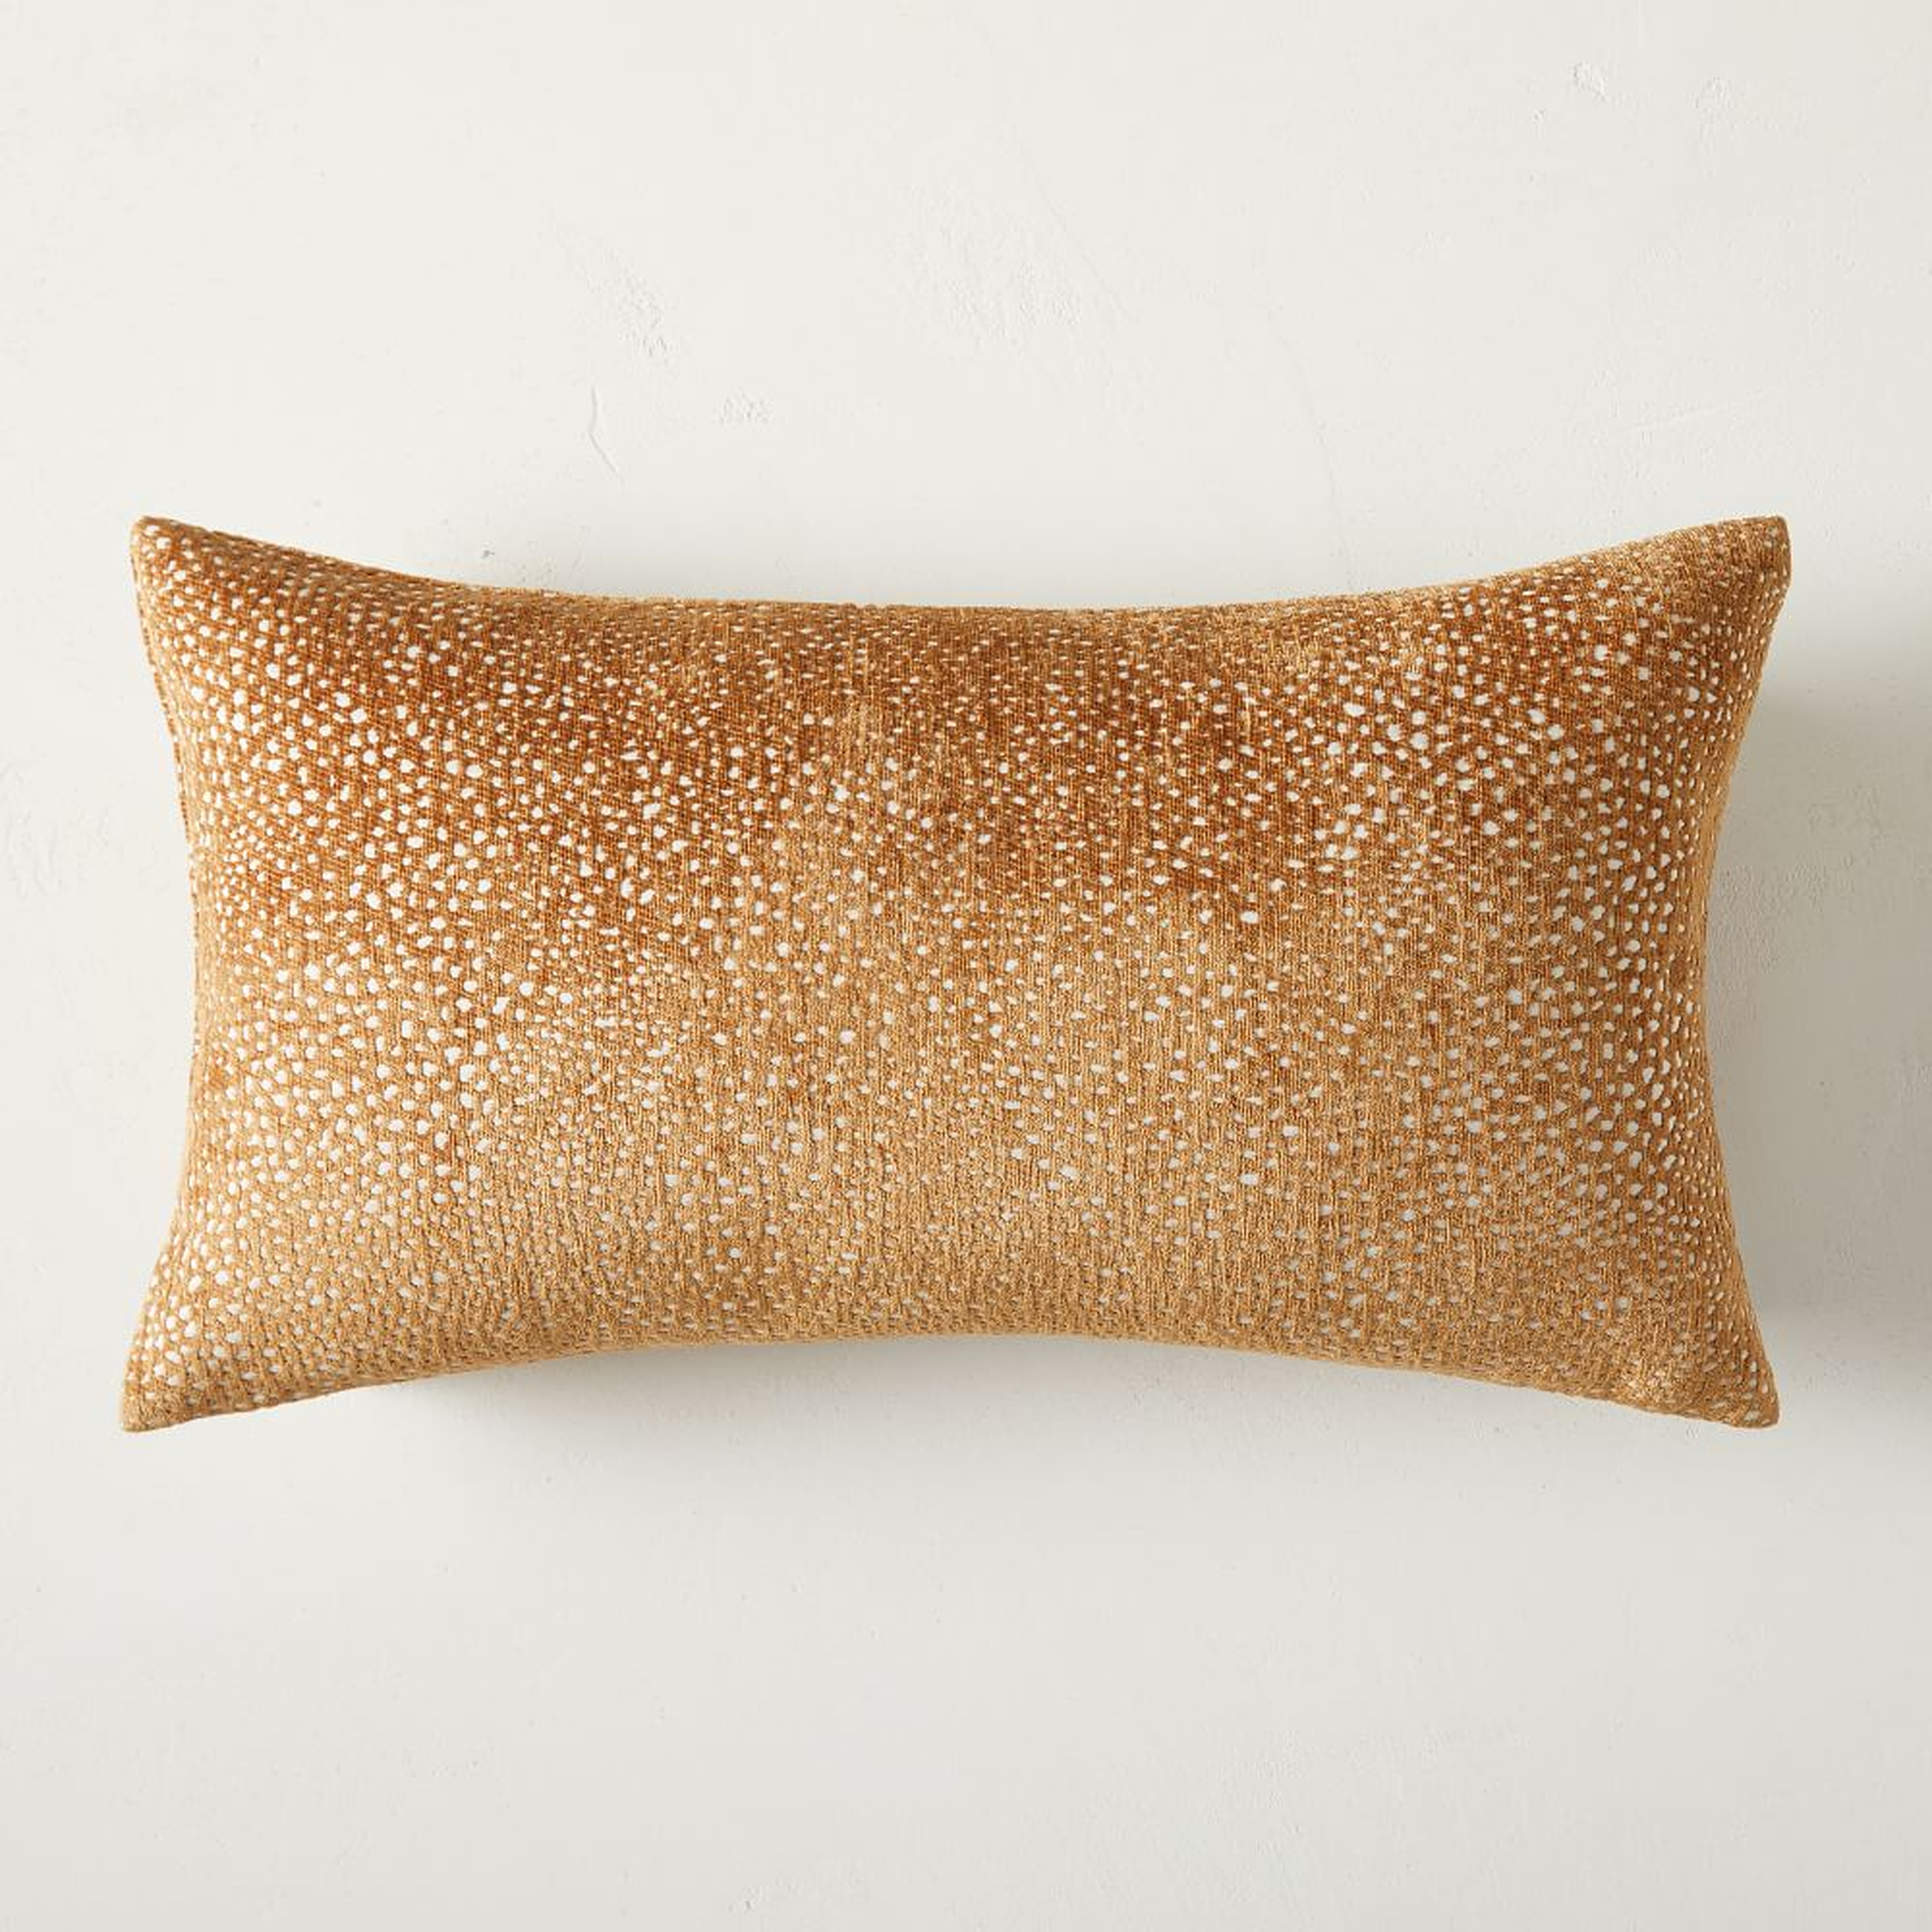 Dotted Chenille Jacquard Pillow Cover, 12"x21", Golden Oak - West Elm